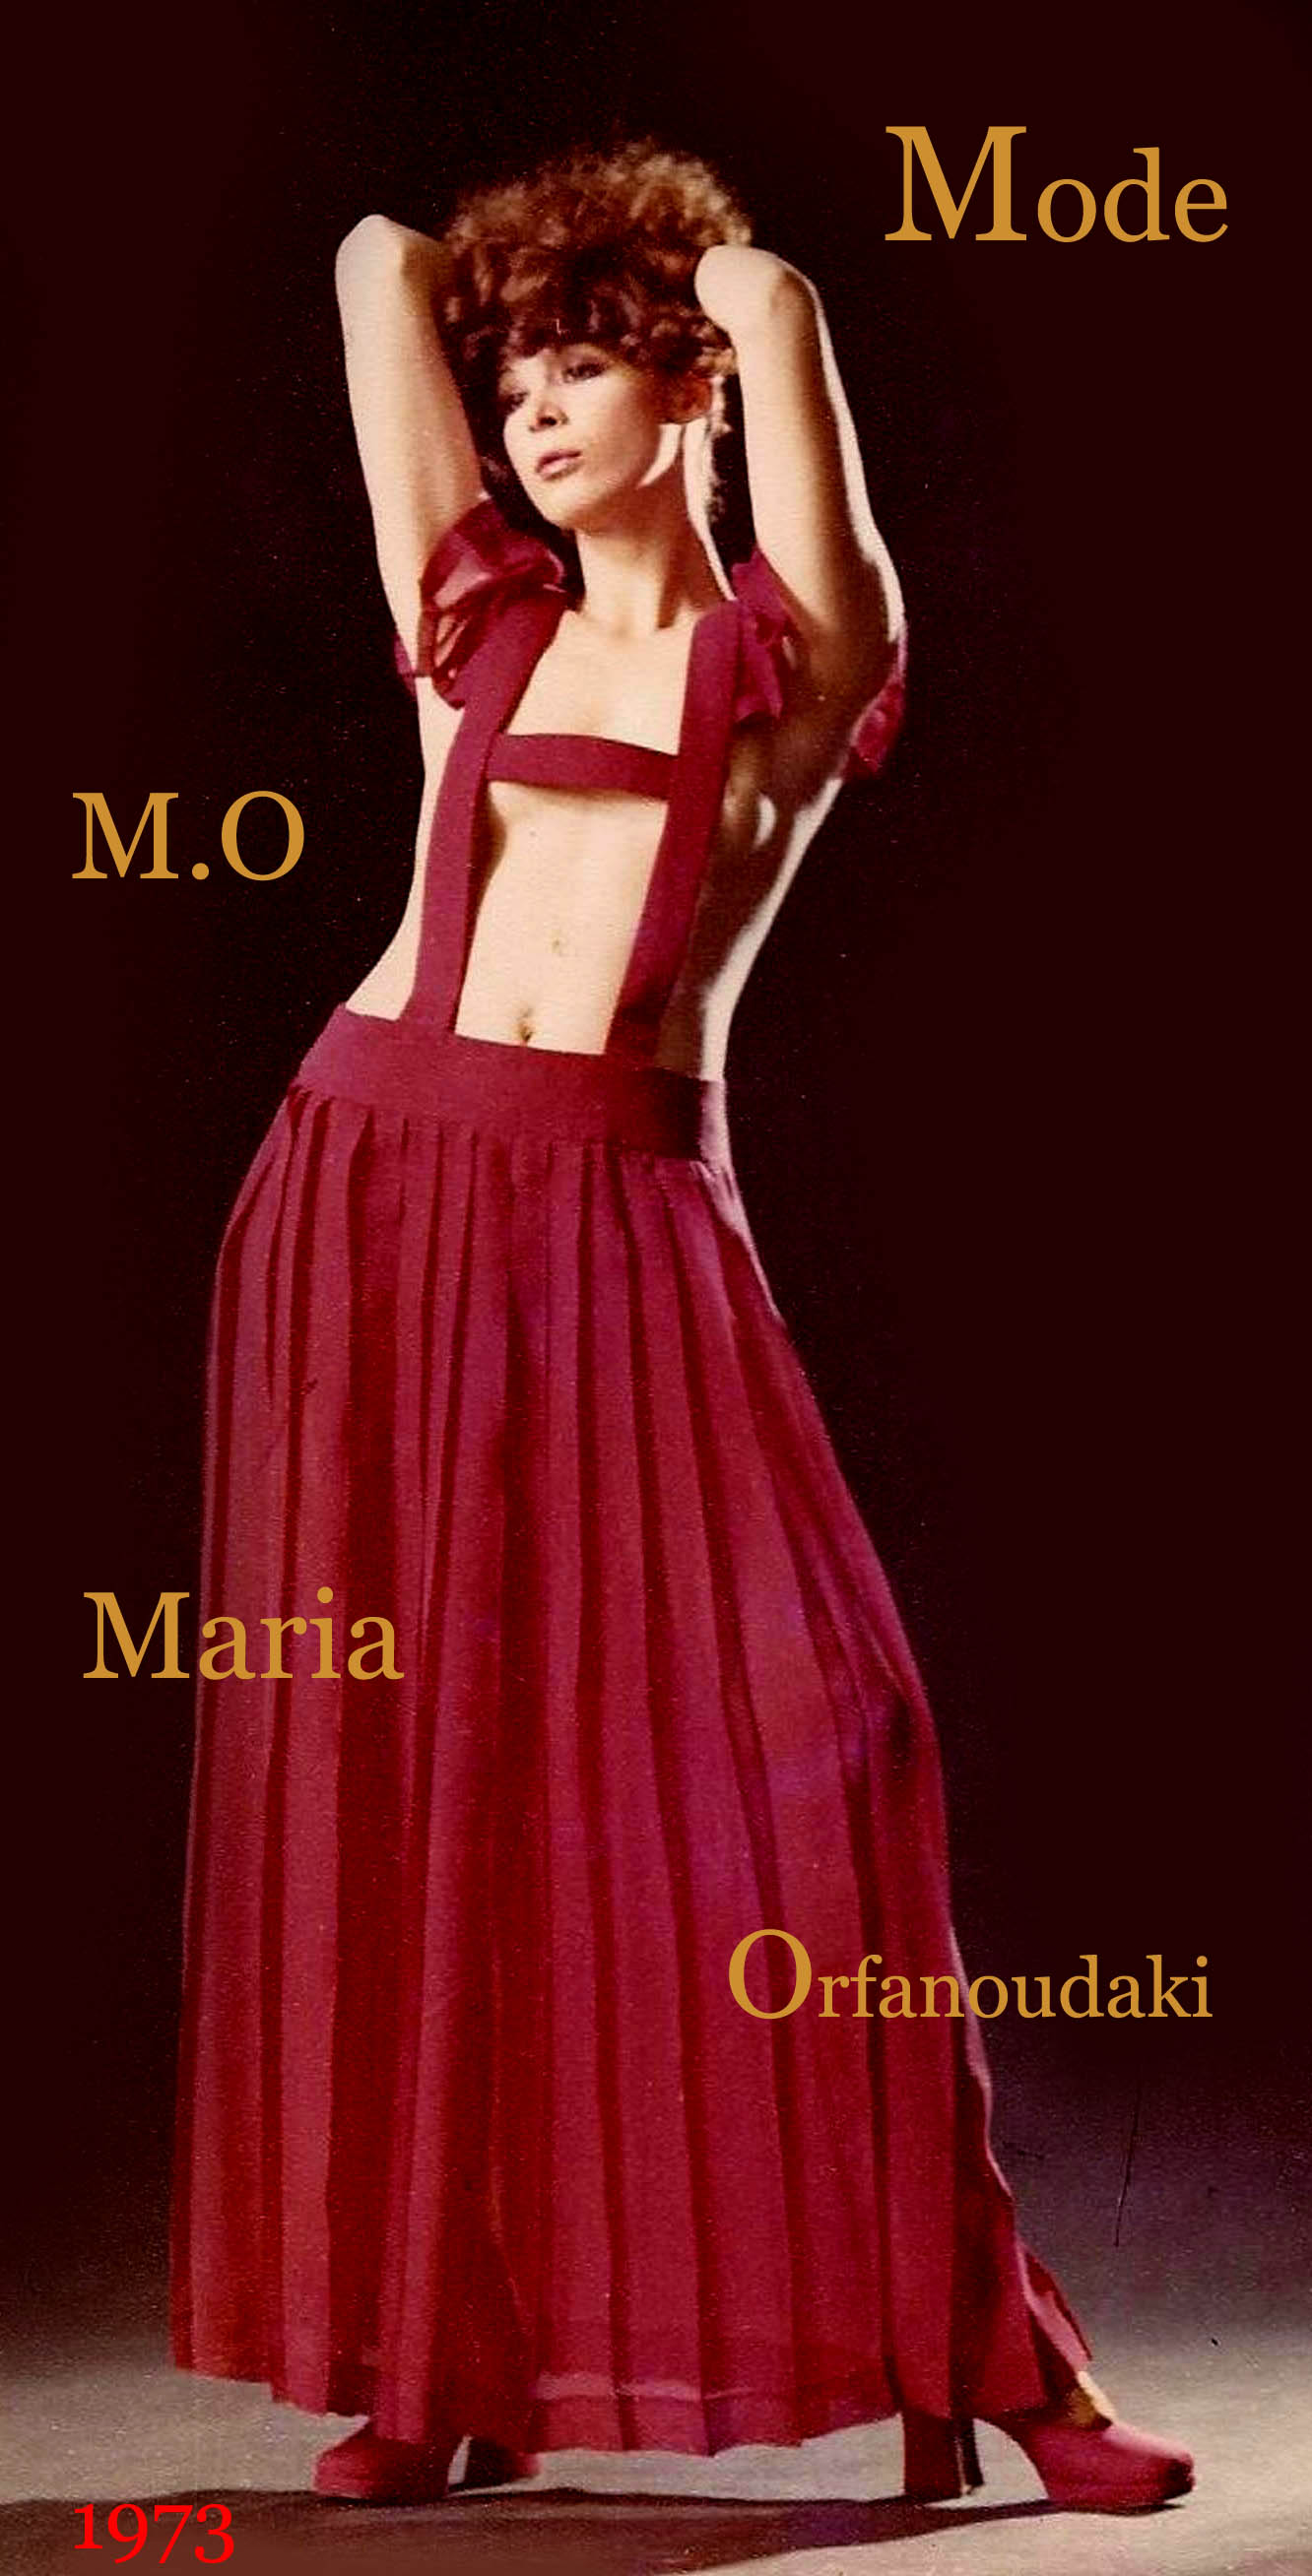 fashion-mode-maria-orfanoudaki-mo-30